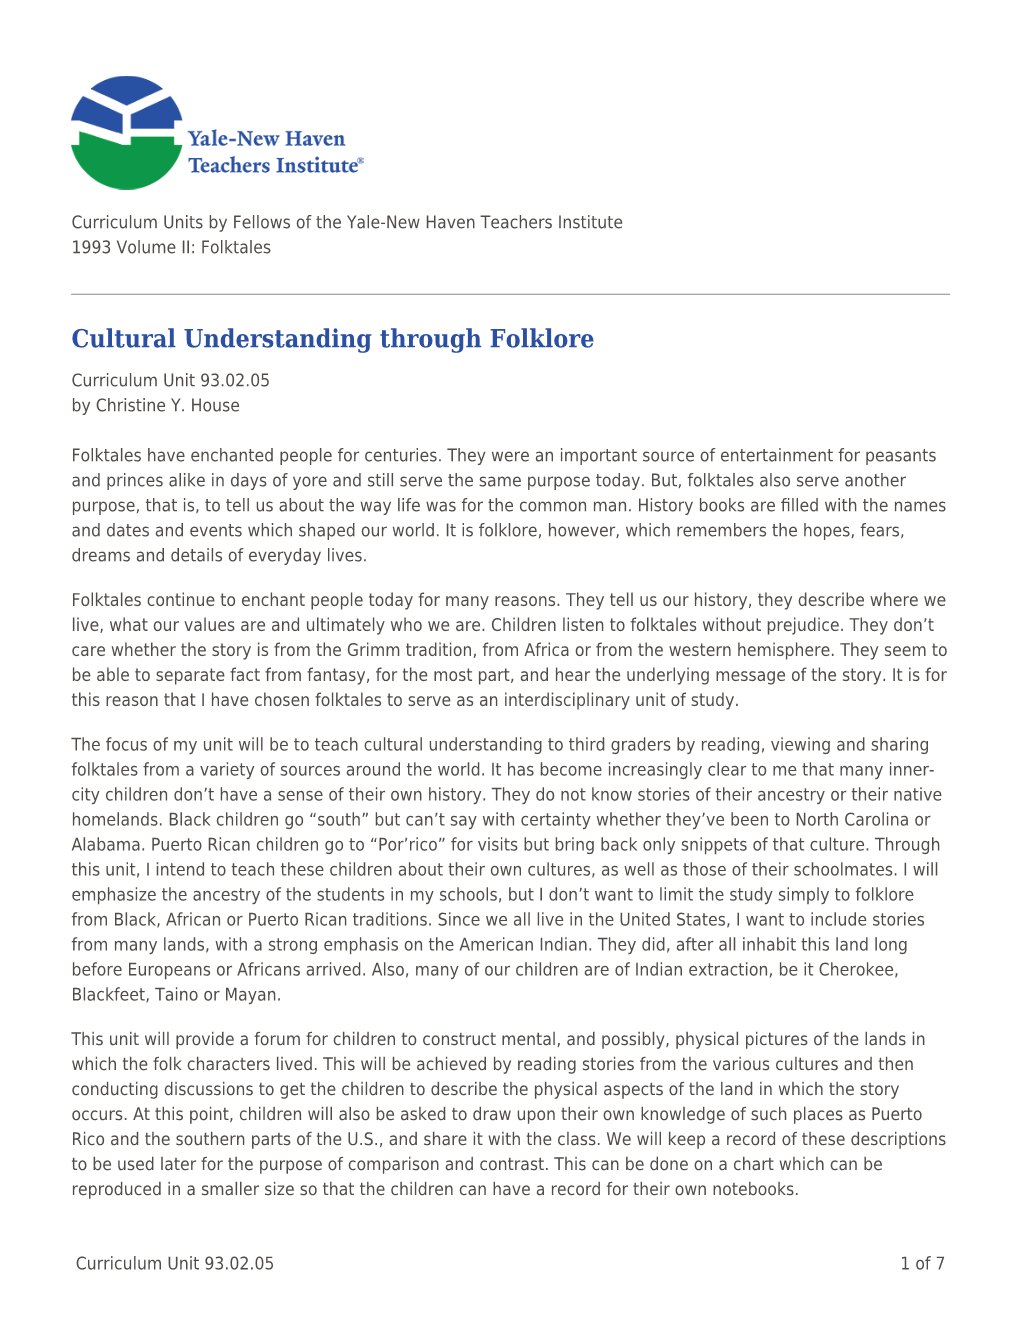 Cultural Understanding Through Folklore